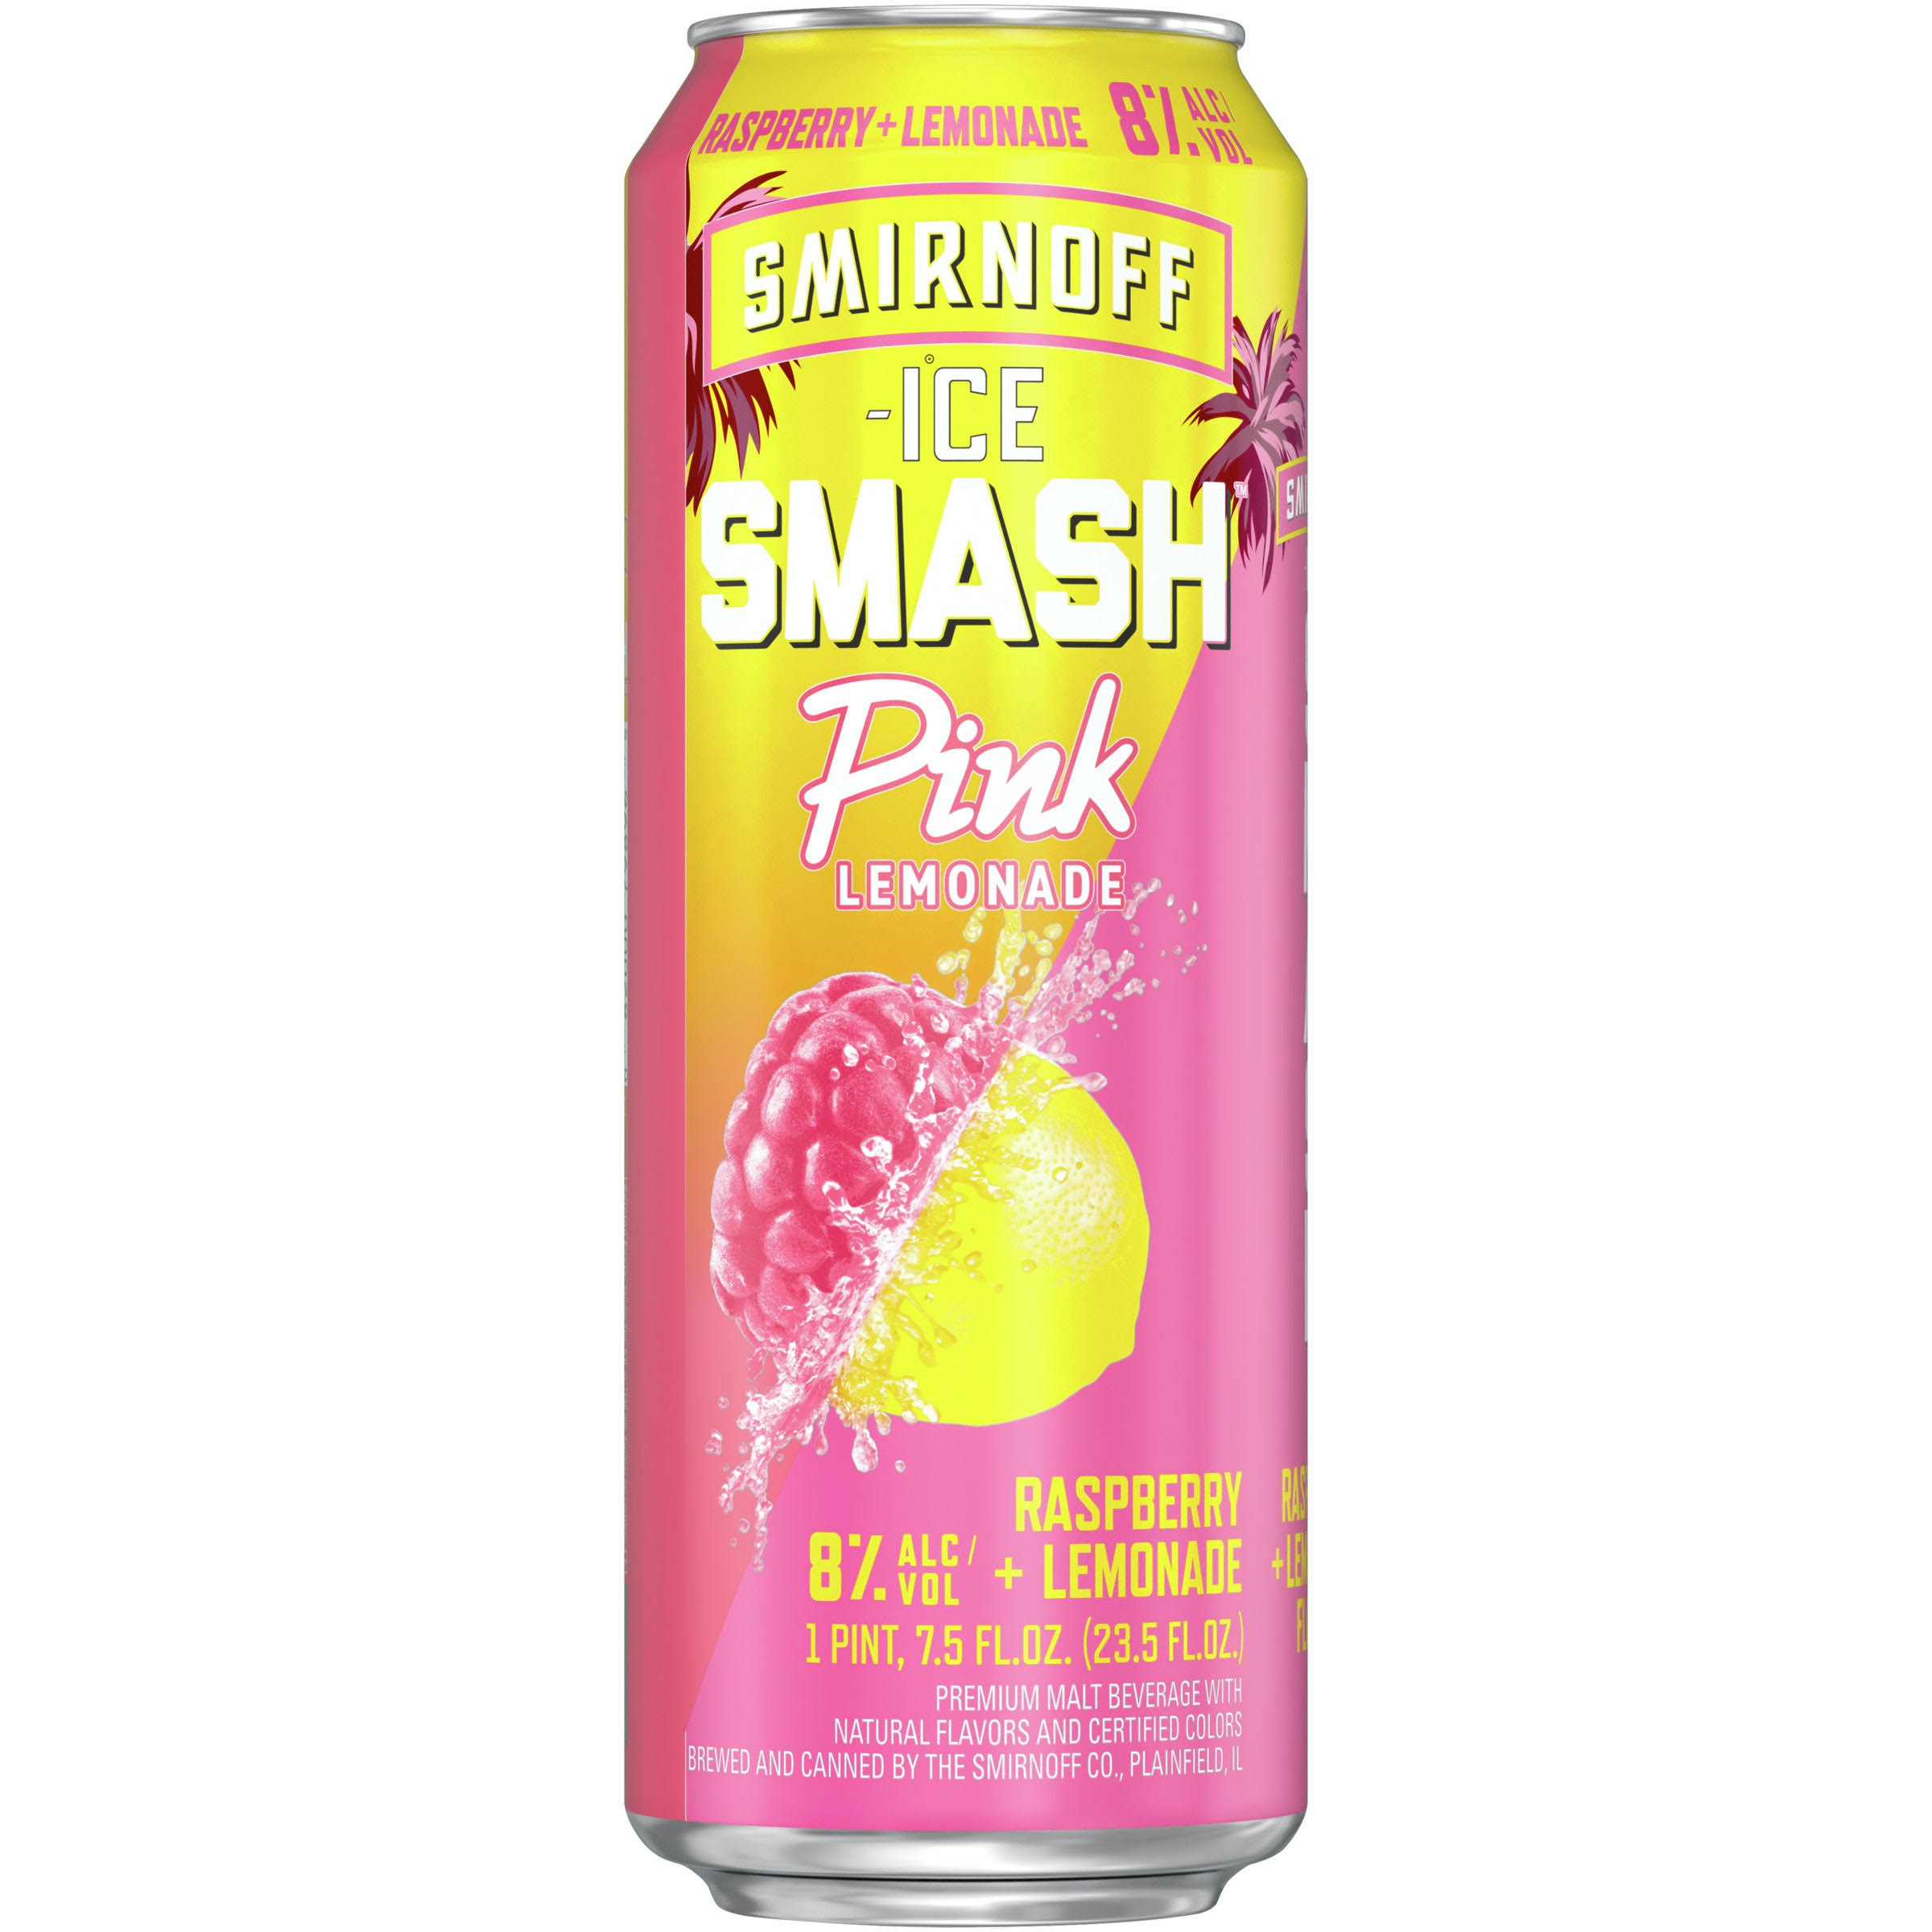 Smirnoff Ice Smash Pink Lemonade - 23.5 fl oz